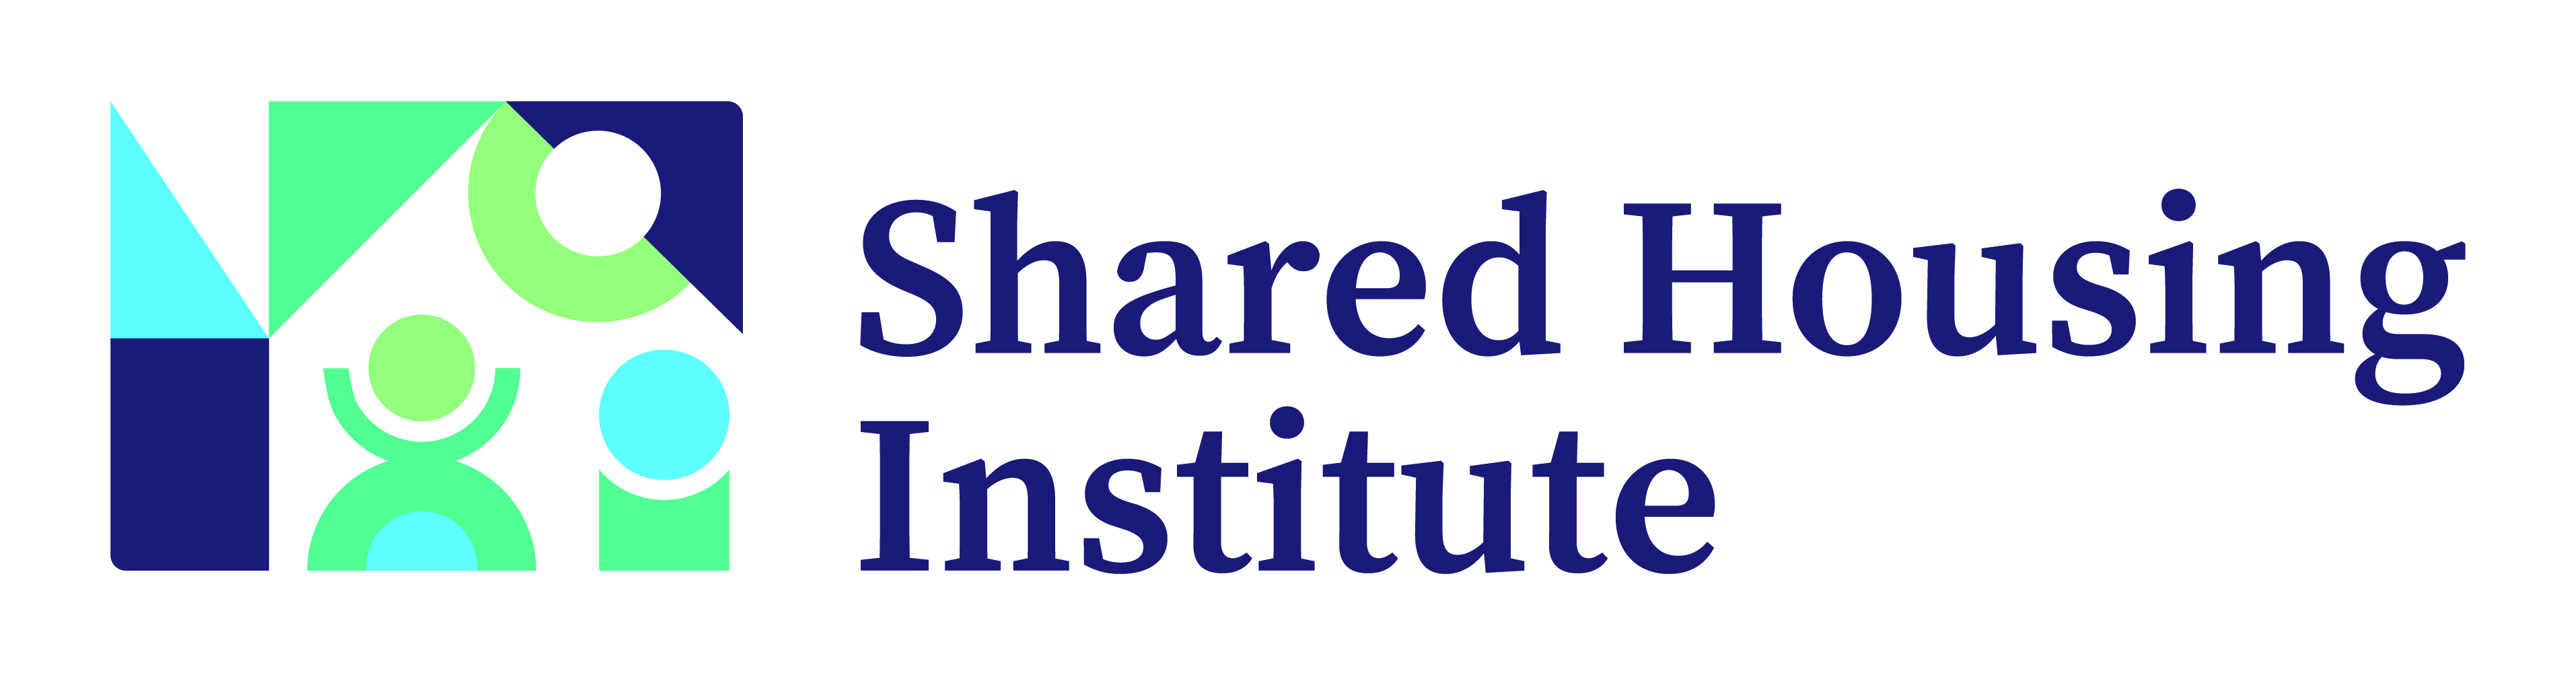 shared housing institute logo